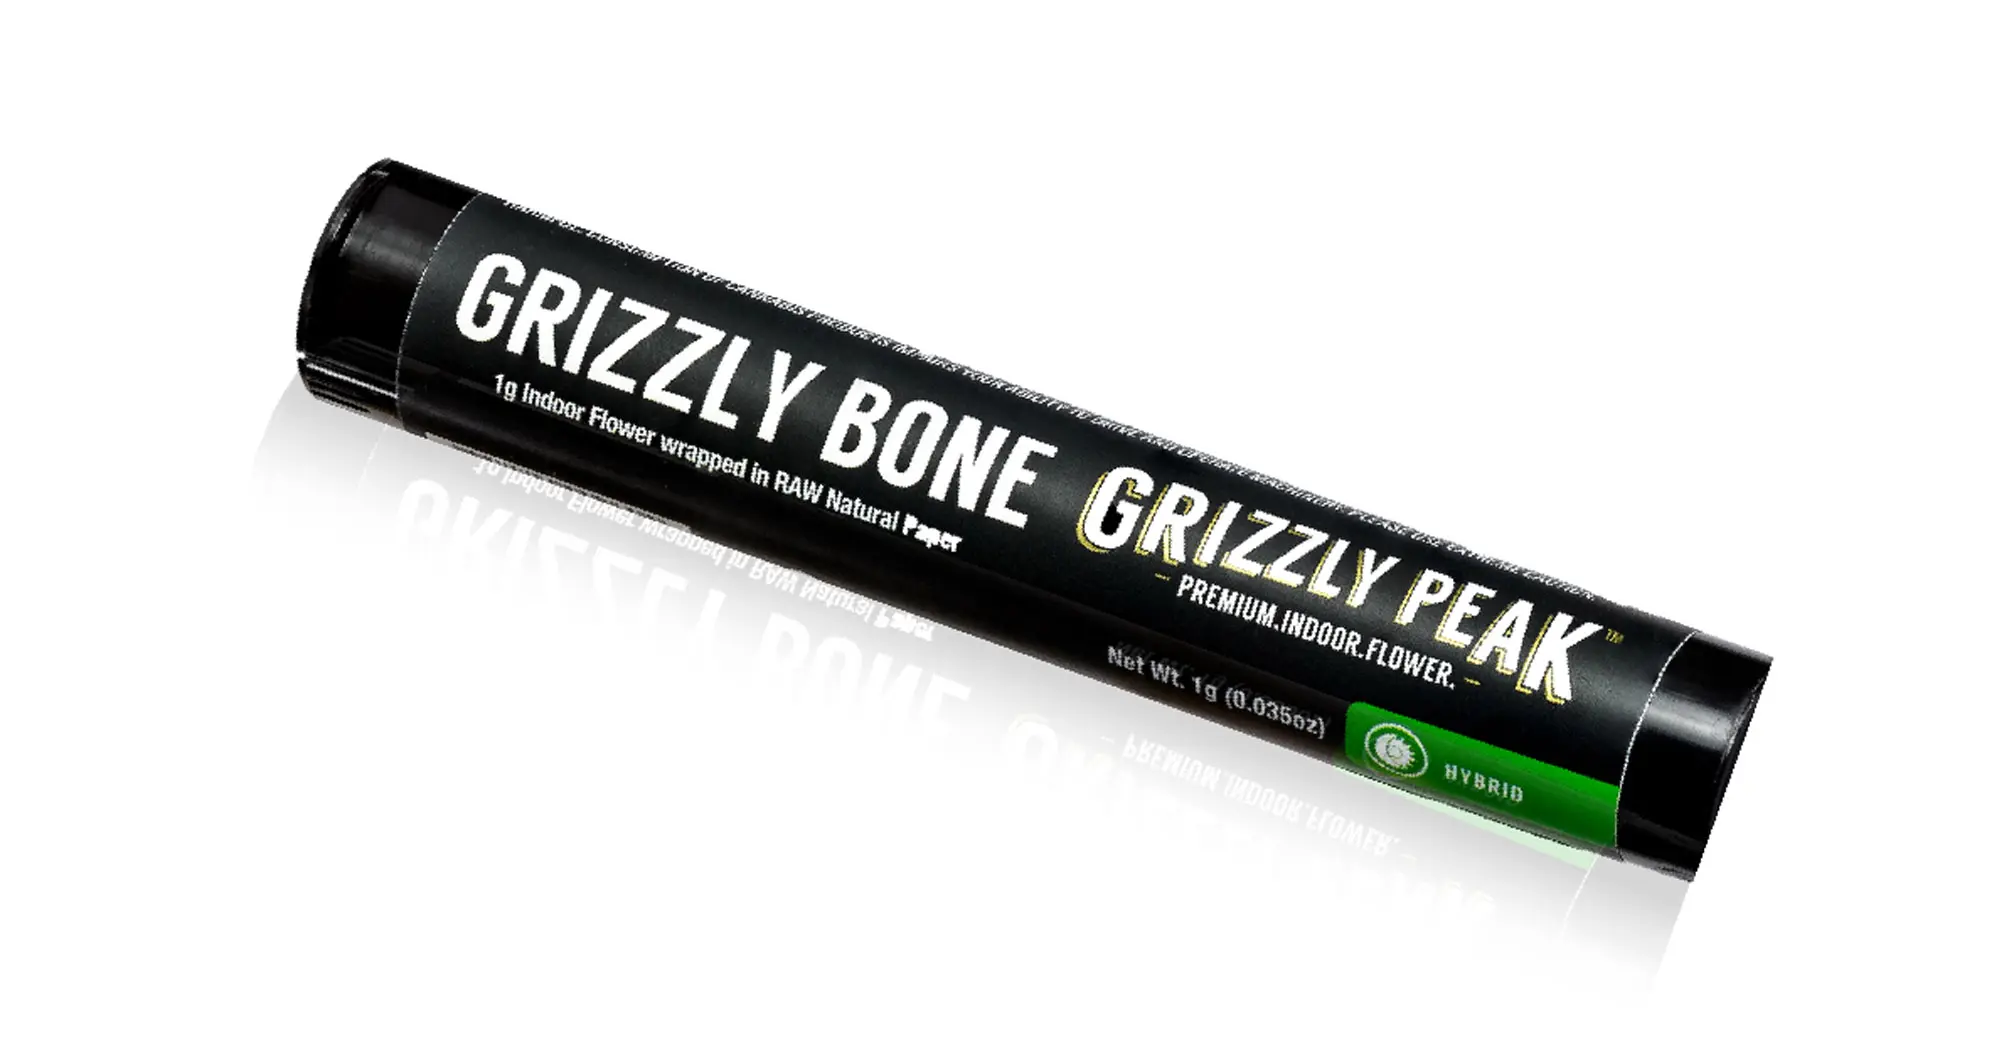 Grizzly Bone Pre-Roll